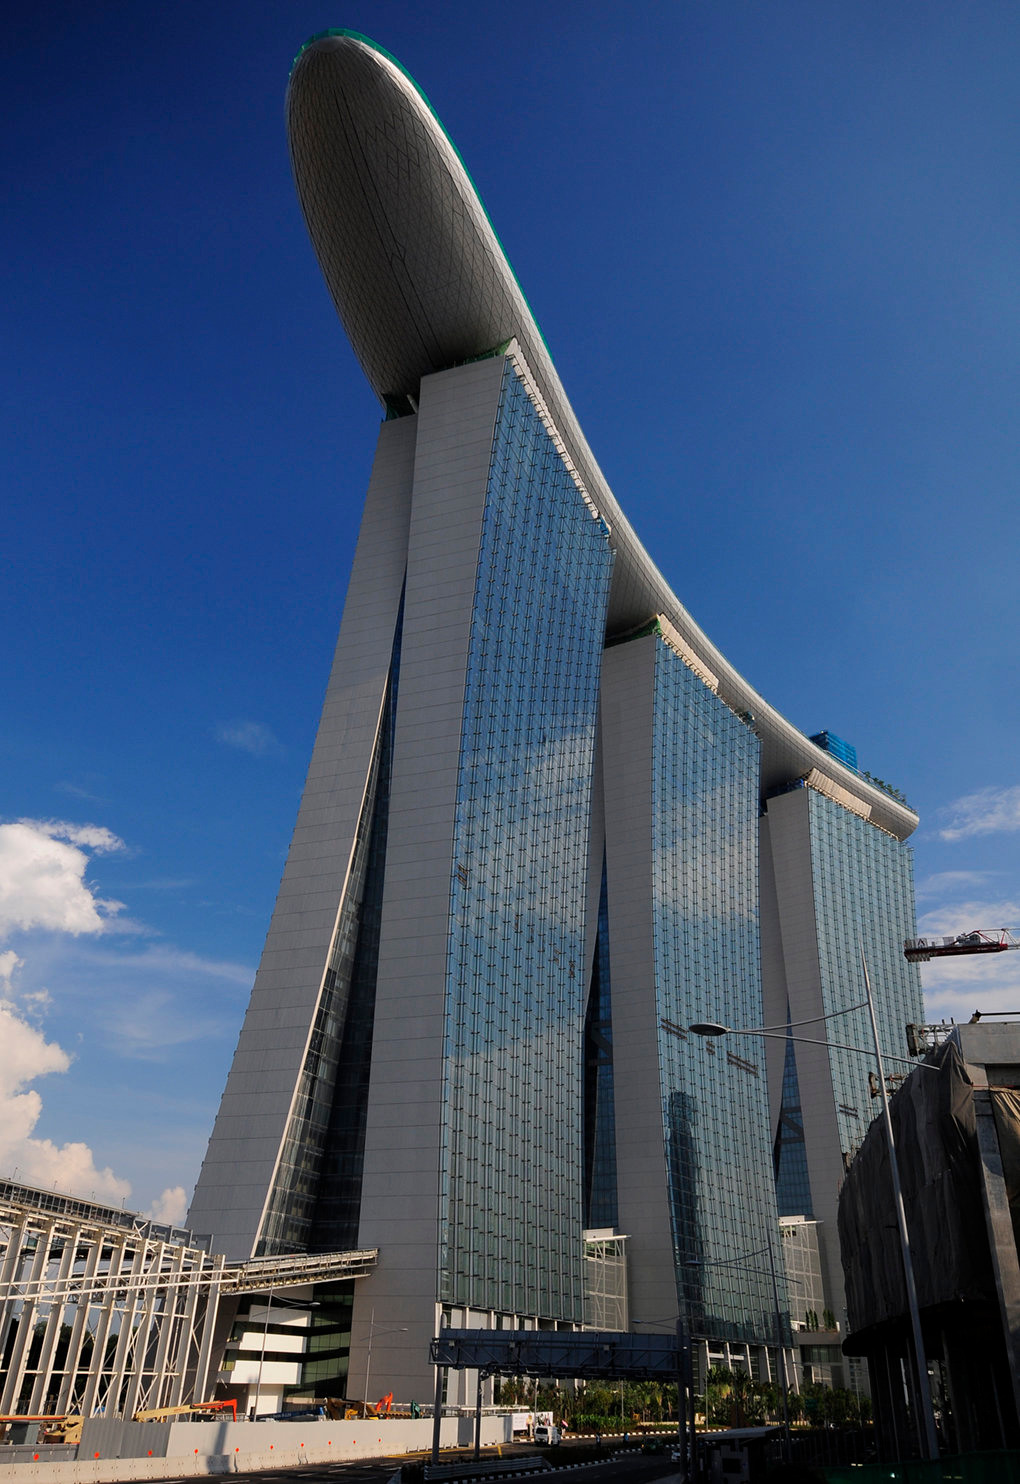 Бизнес-центр гостиничного комплекса Marina Bay Sands в Сингапуре. Построен по проекту Моше Сафди